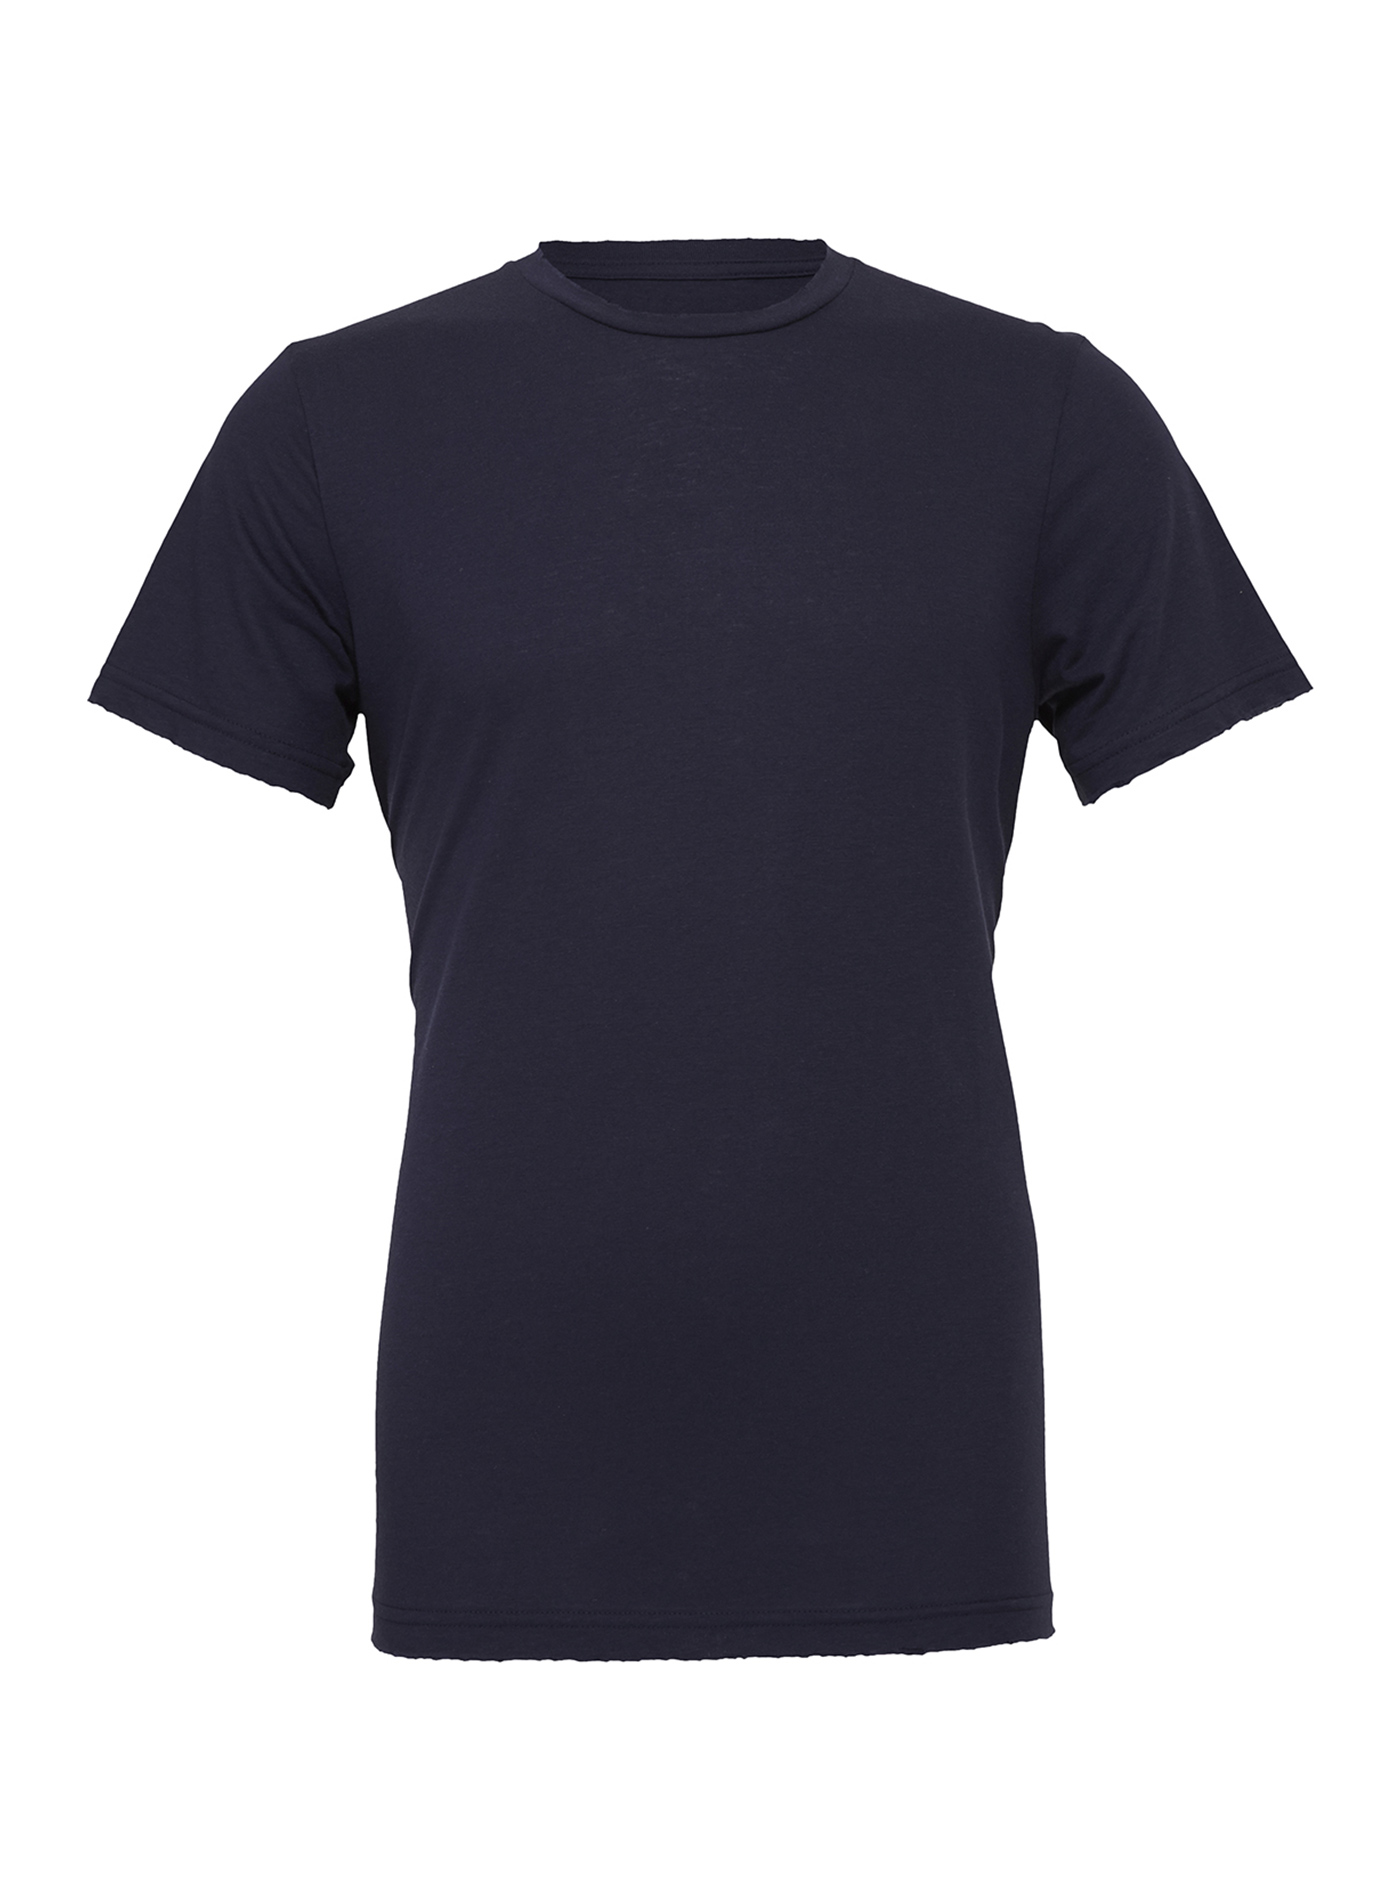 Unisex tričko Bella + Canvas Jersey - tmavě modrá M